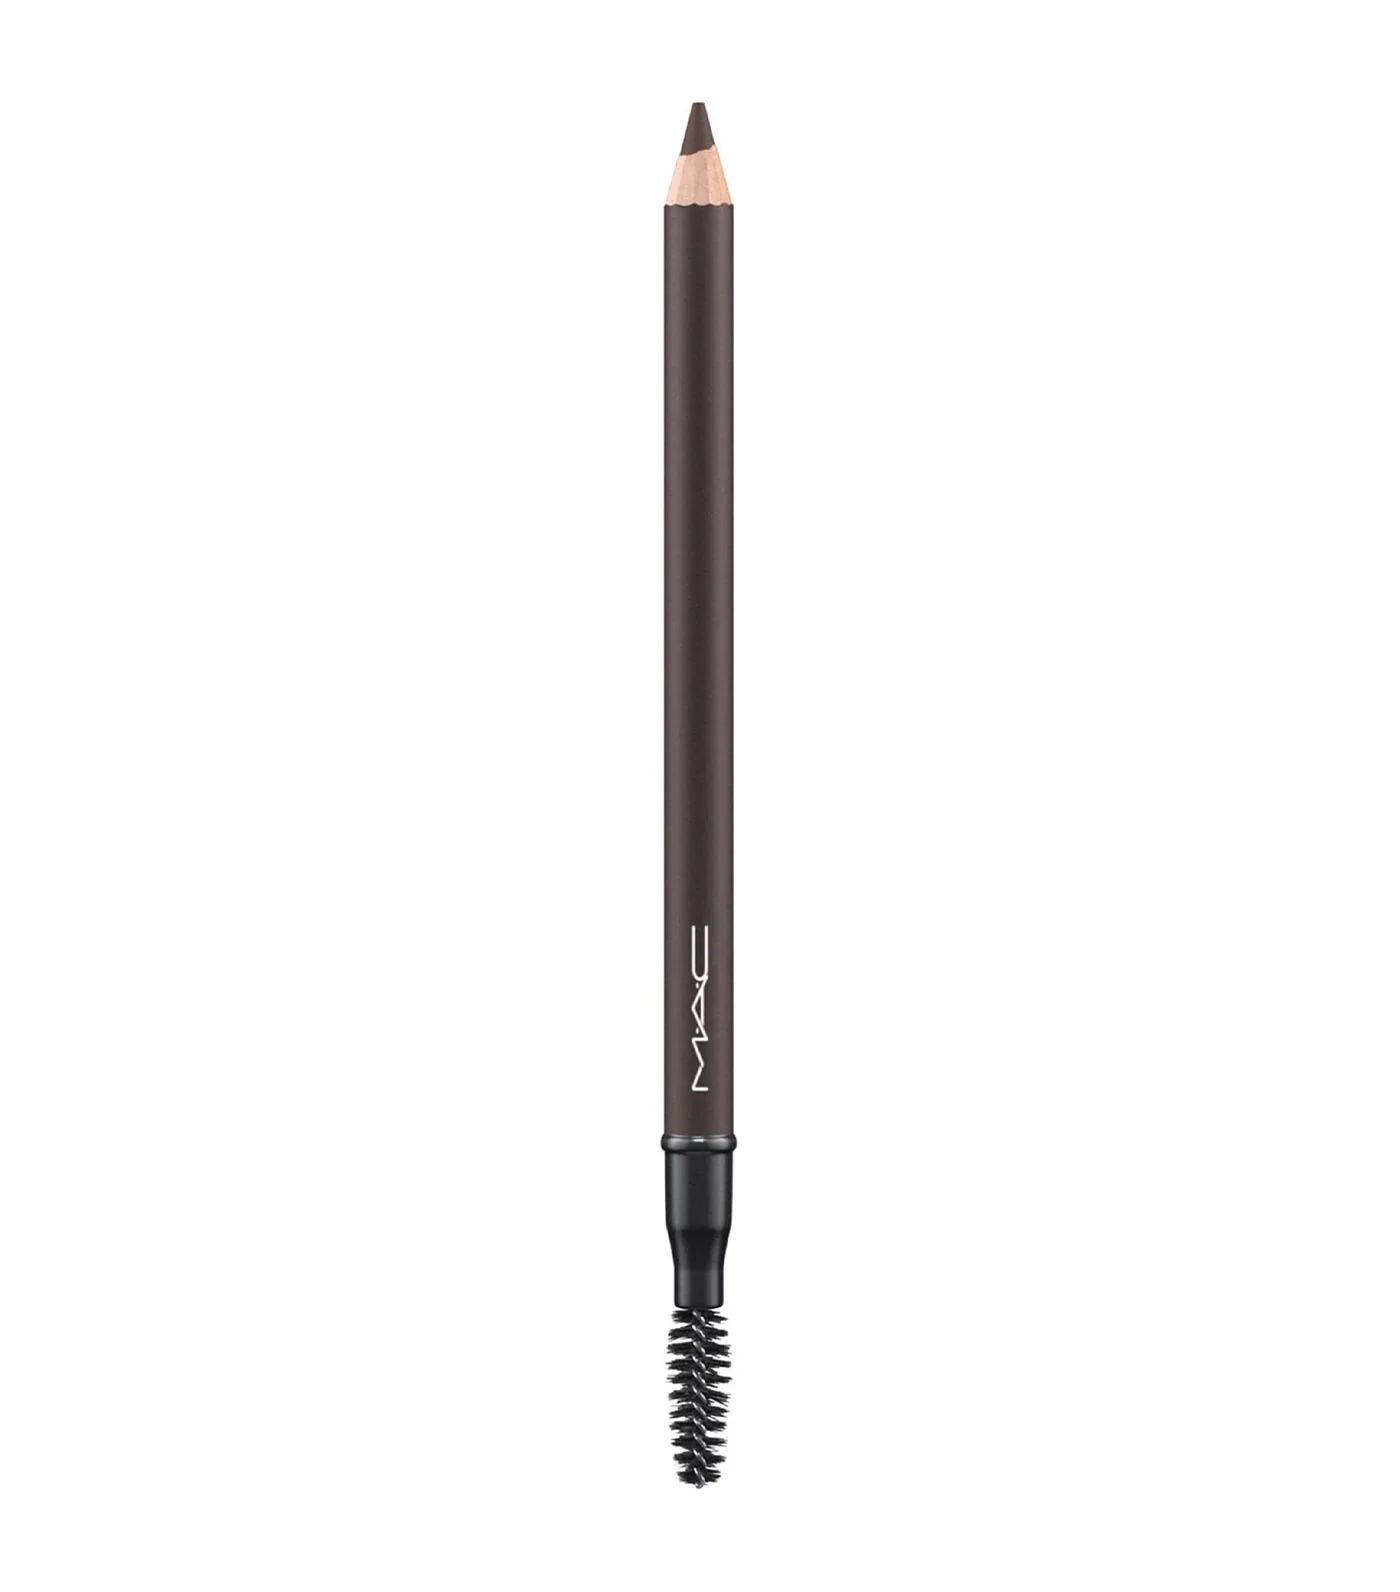 Mac карандаш для бровей Veluxe Brow Liner Omega. Eva Mosaic карандаш для бровей Анютины глазки. Карандаш Pupa Eyebrow Pencil. Eva Mosaic ideal Brow карандаш.